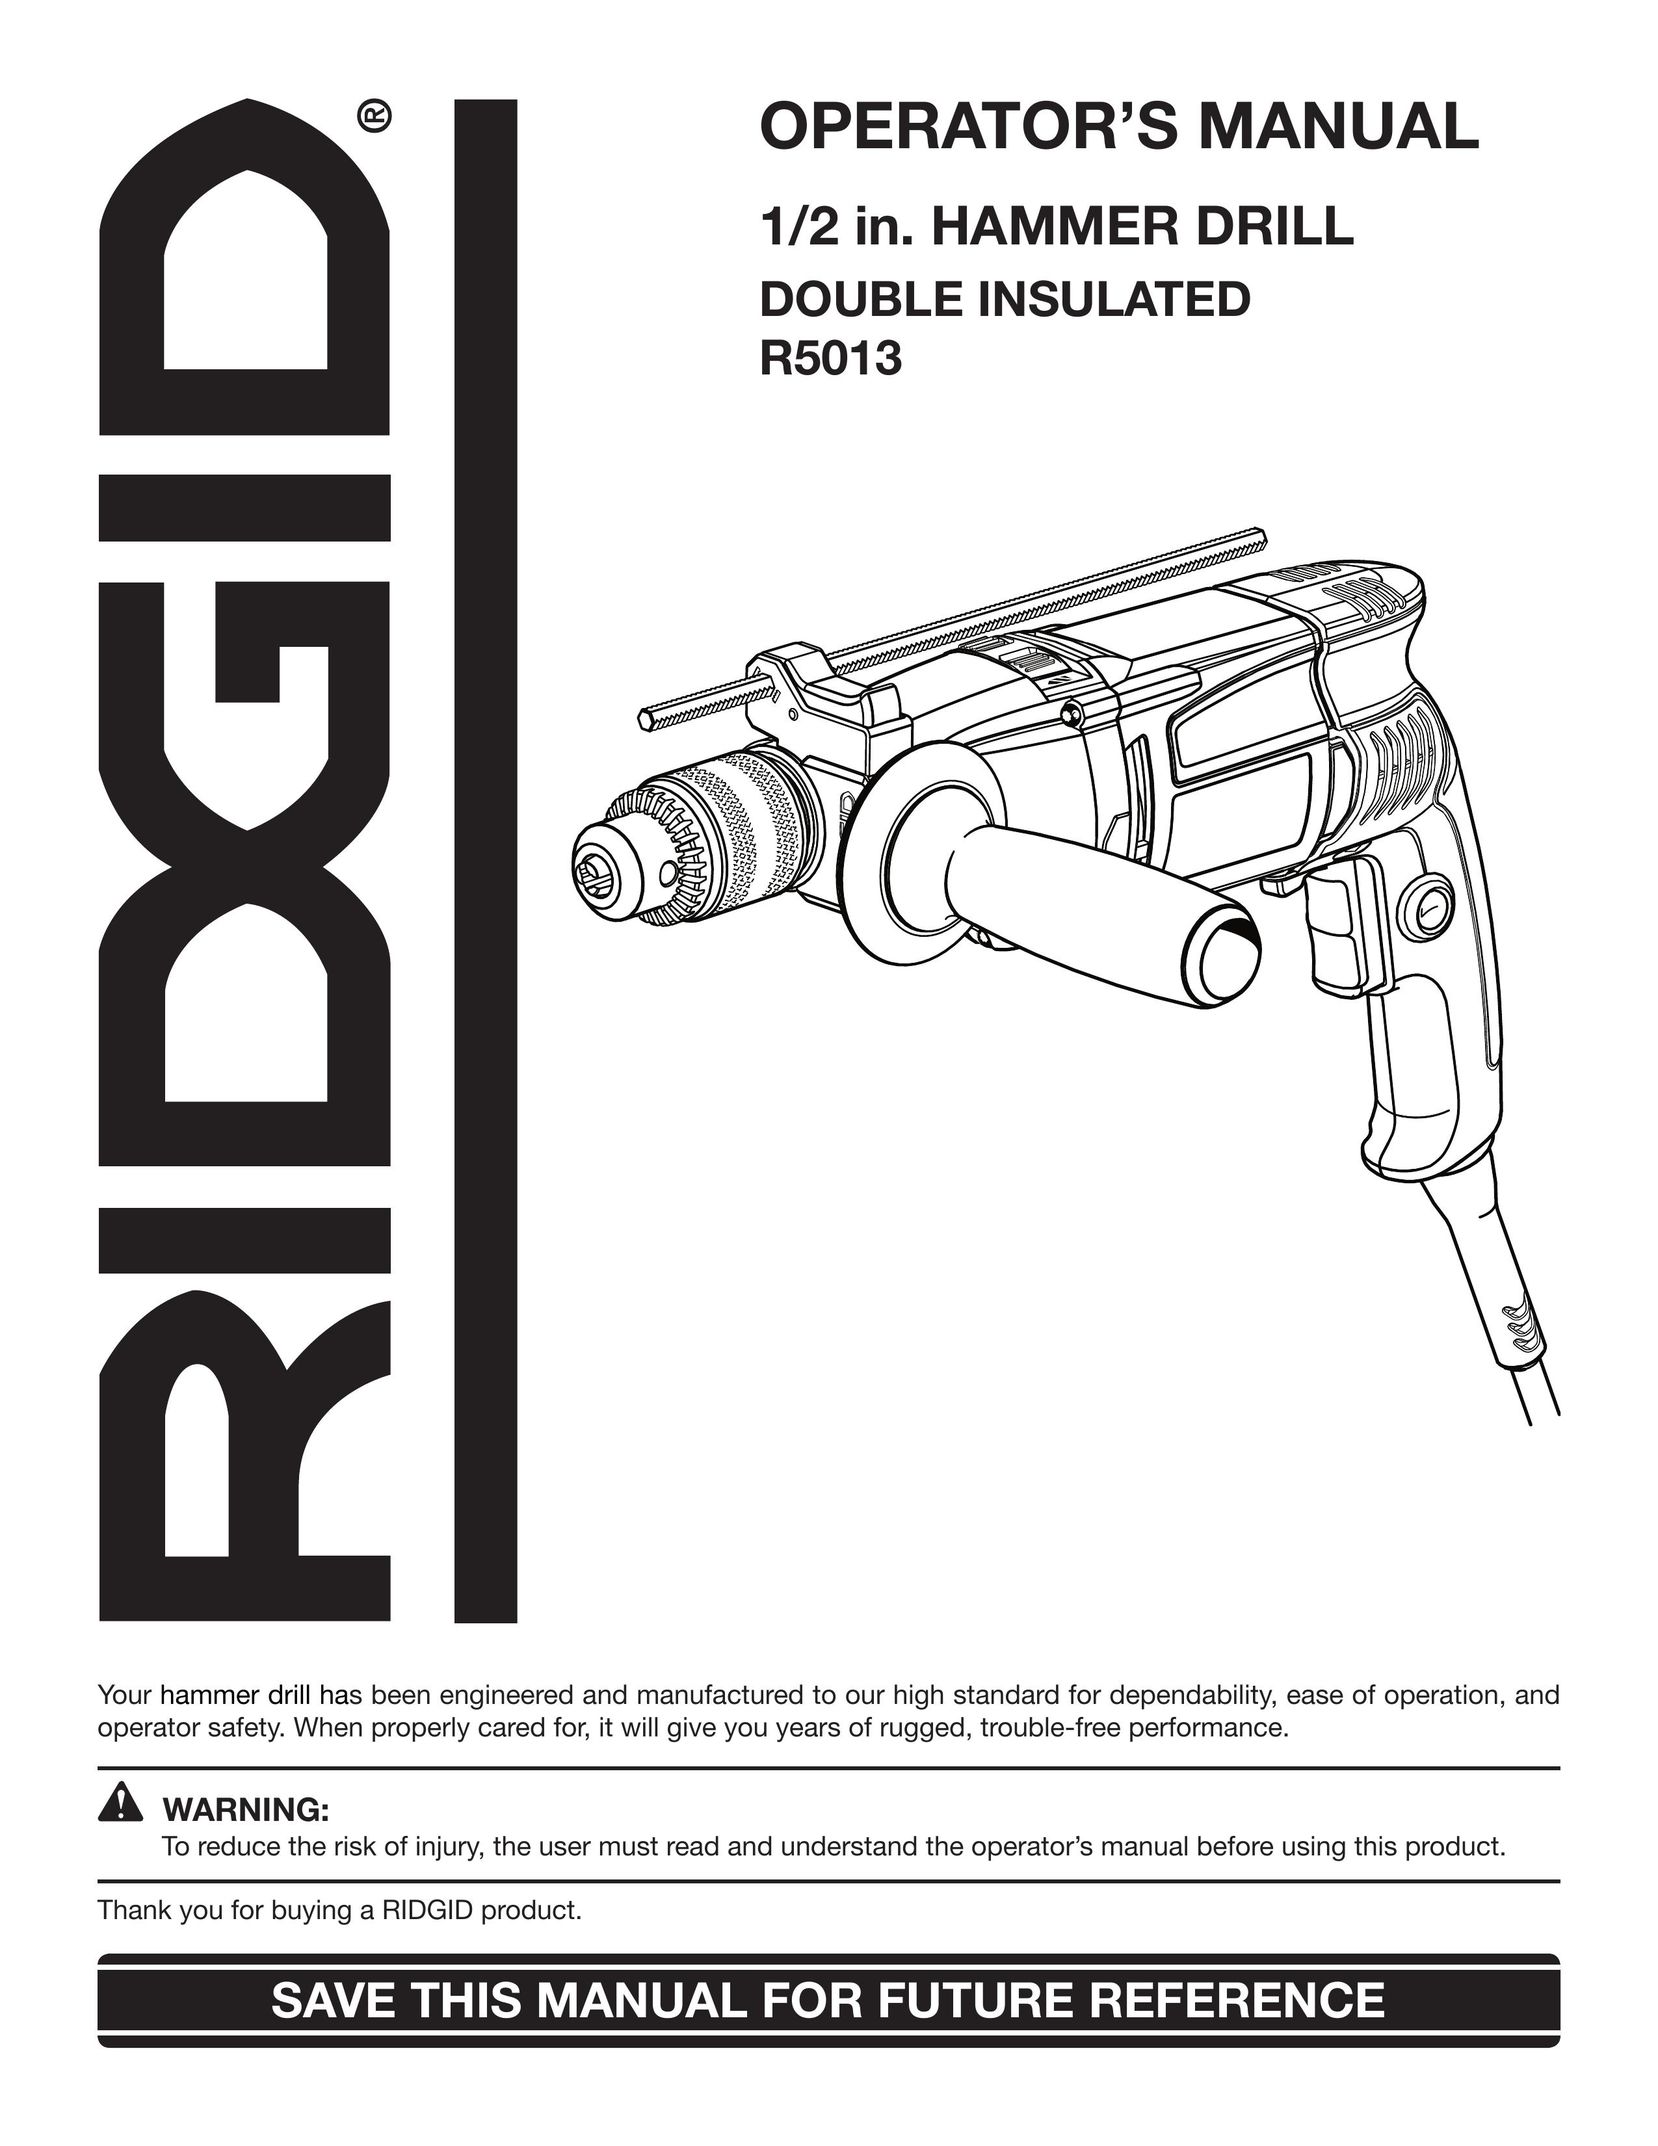 RIDGID R5013 Drill User Manual